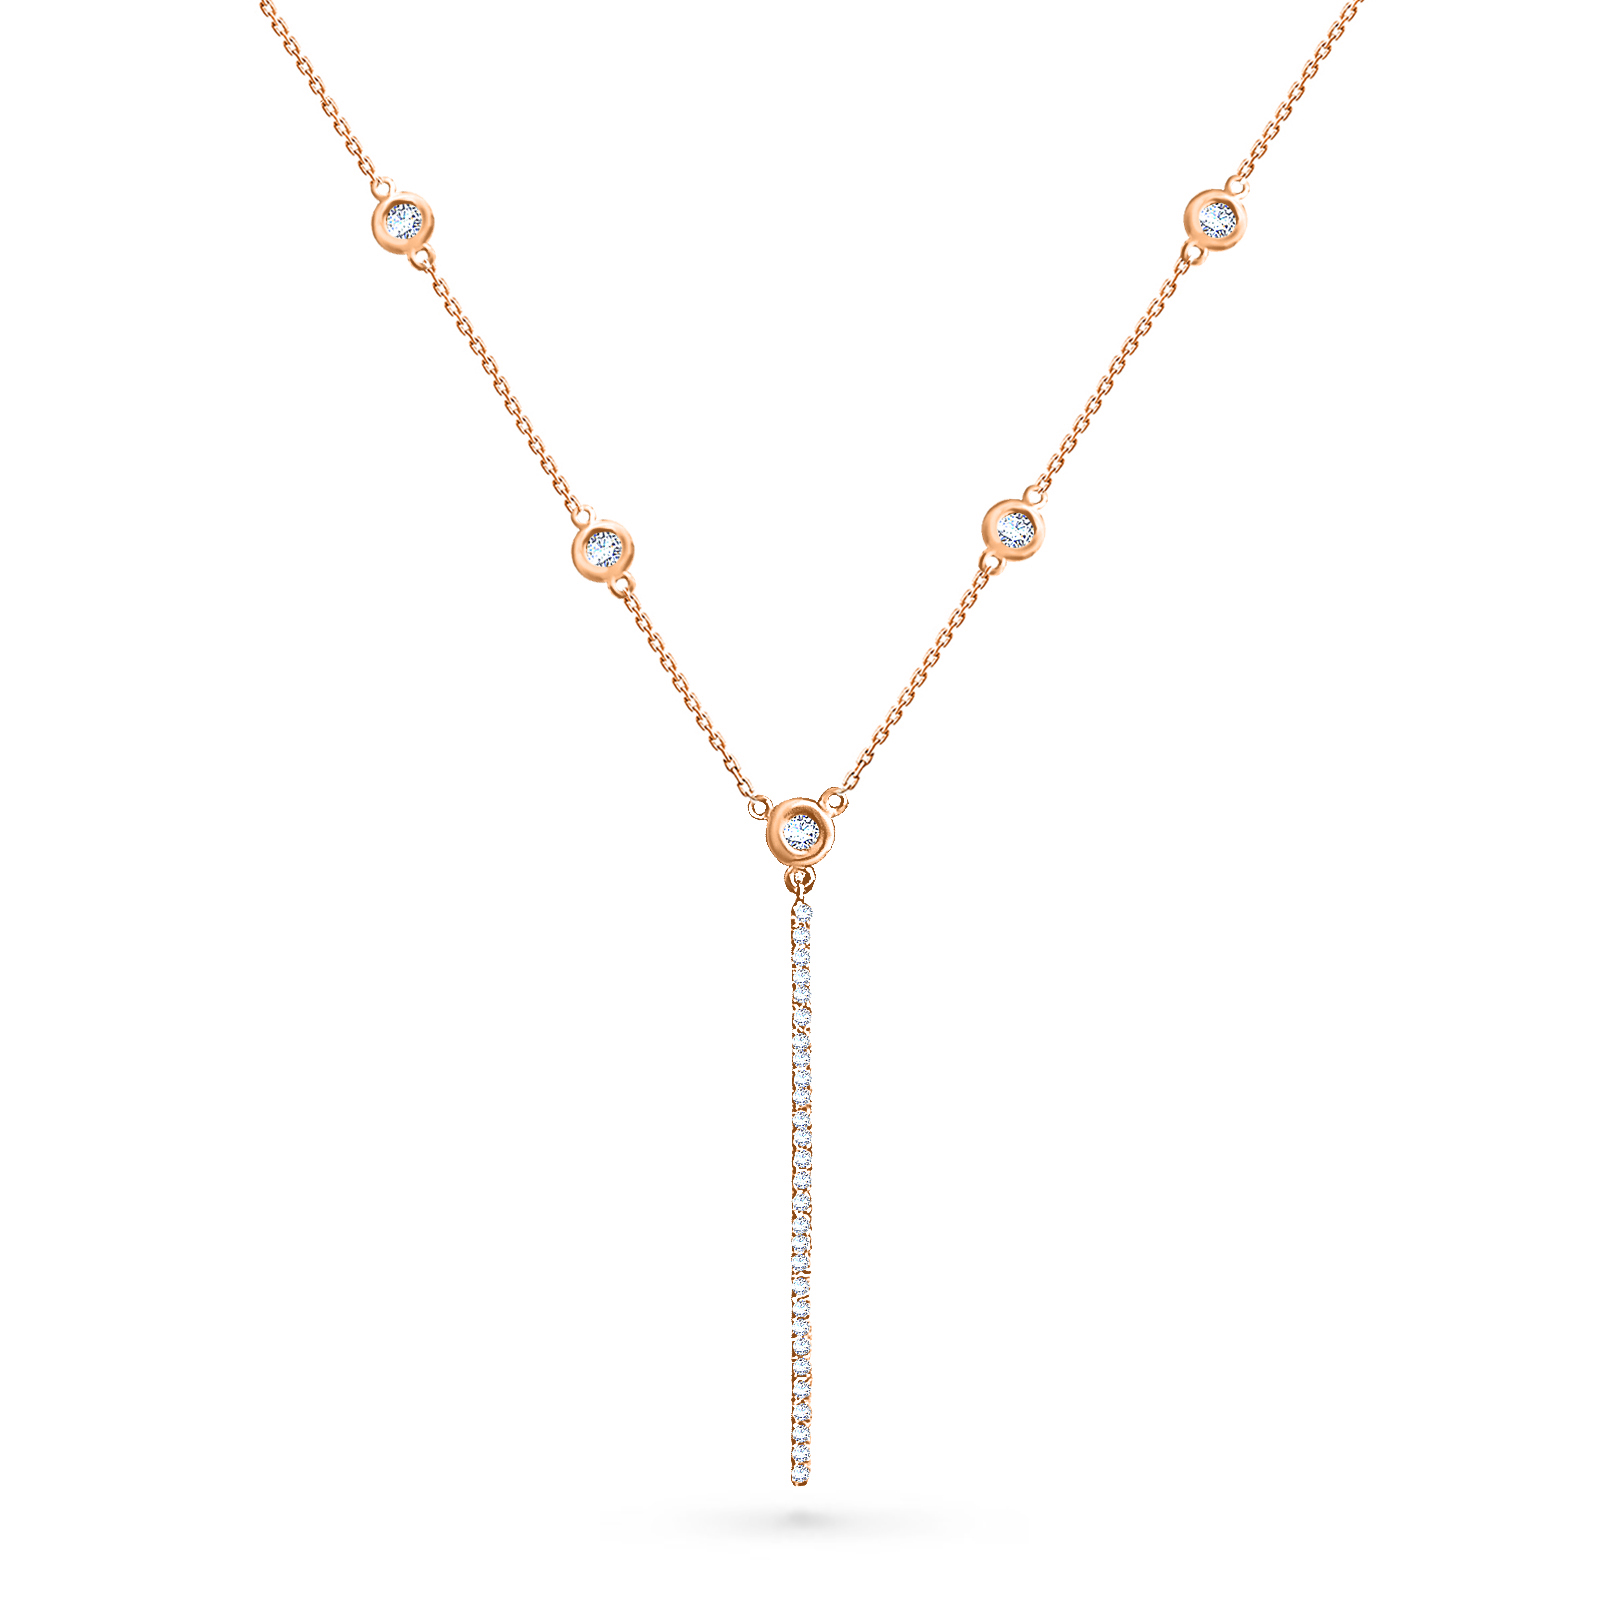 Necklace Paris Dubai Constellation 18K Gold and Diamonds - Aquae Jewels